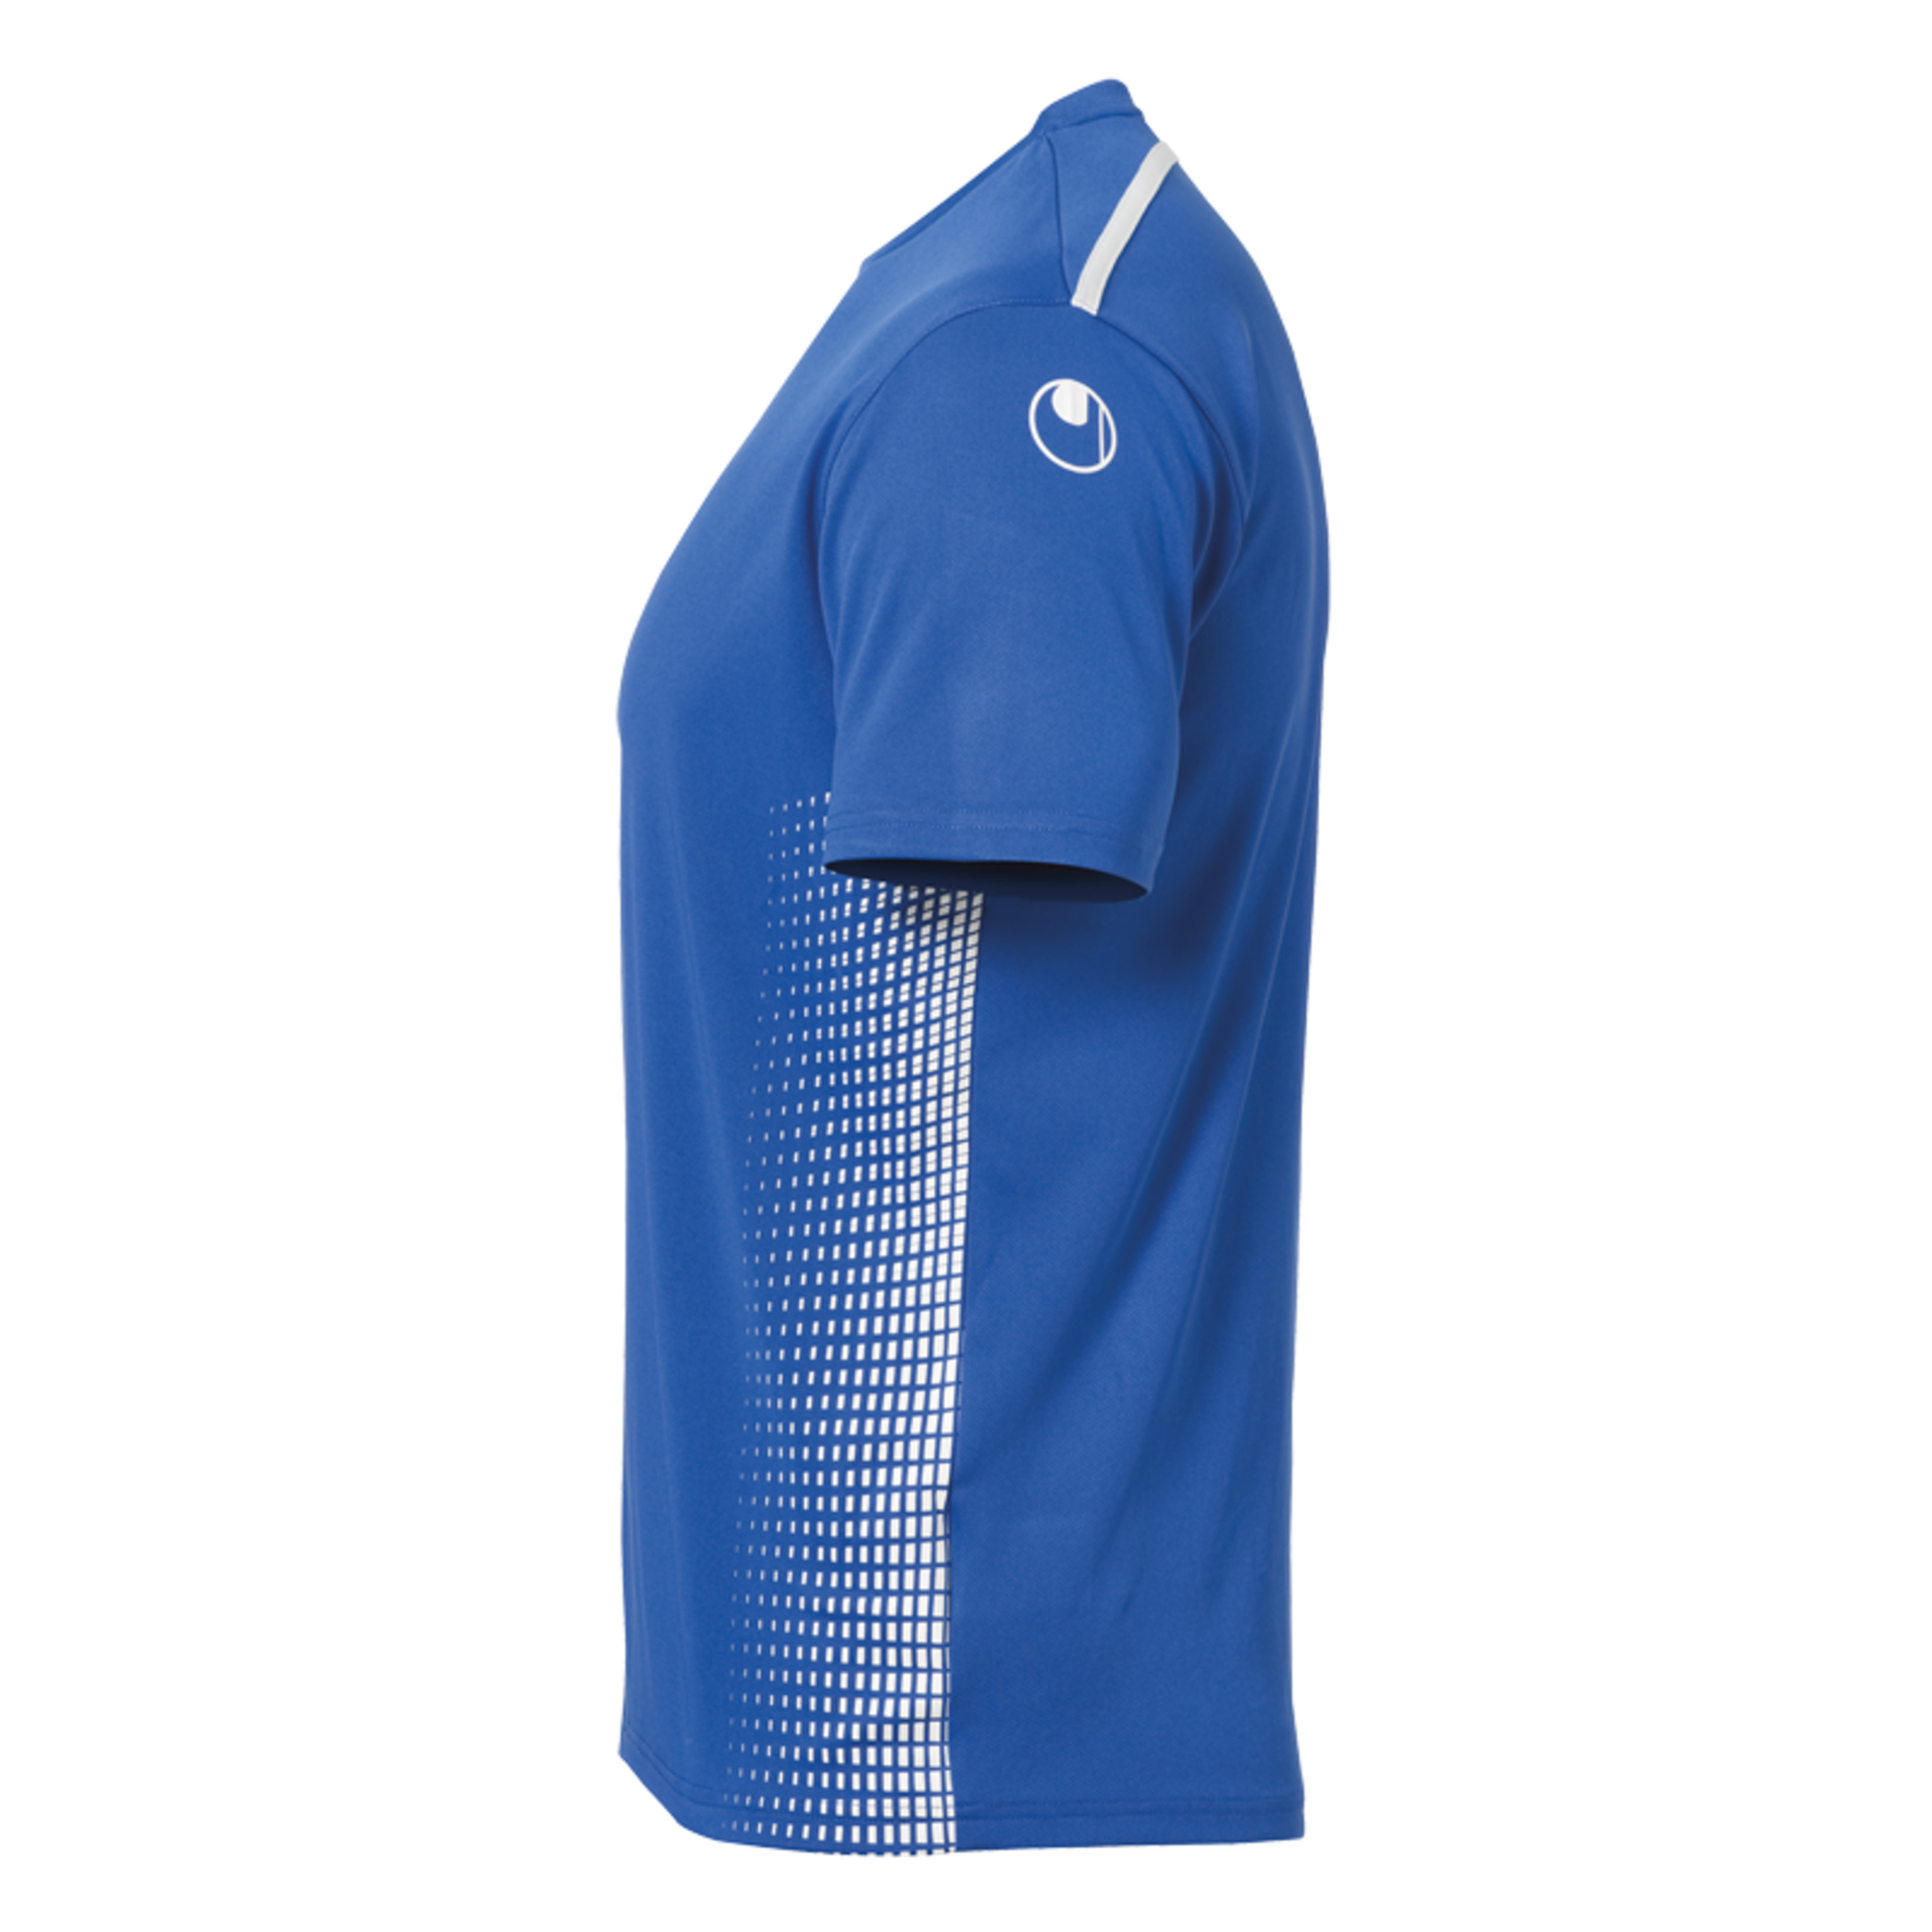 Camiseta Y Pantalón Uhlsport Score Kit Ss - Azul - Score Kit Ss Azur/blanco Uhlsport  MKP